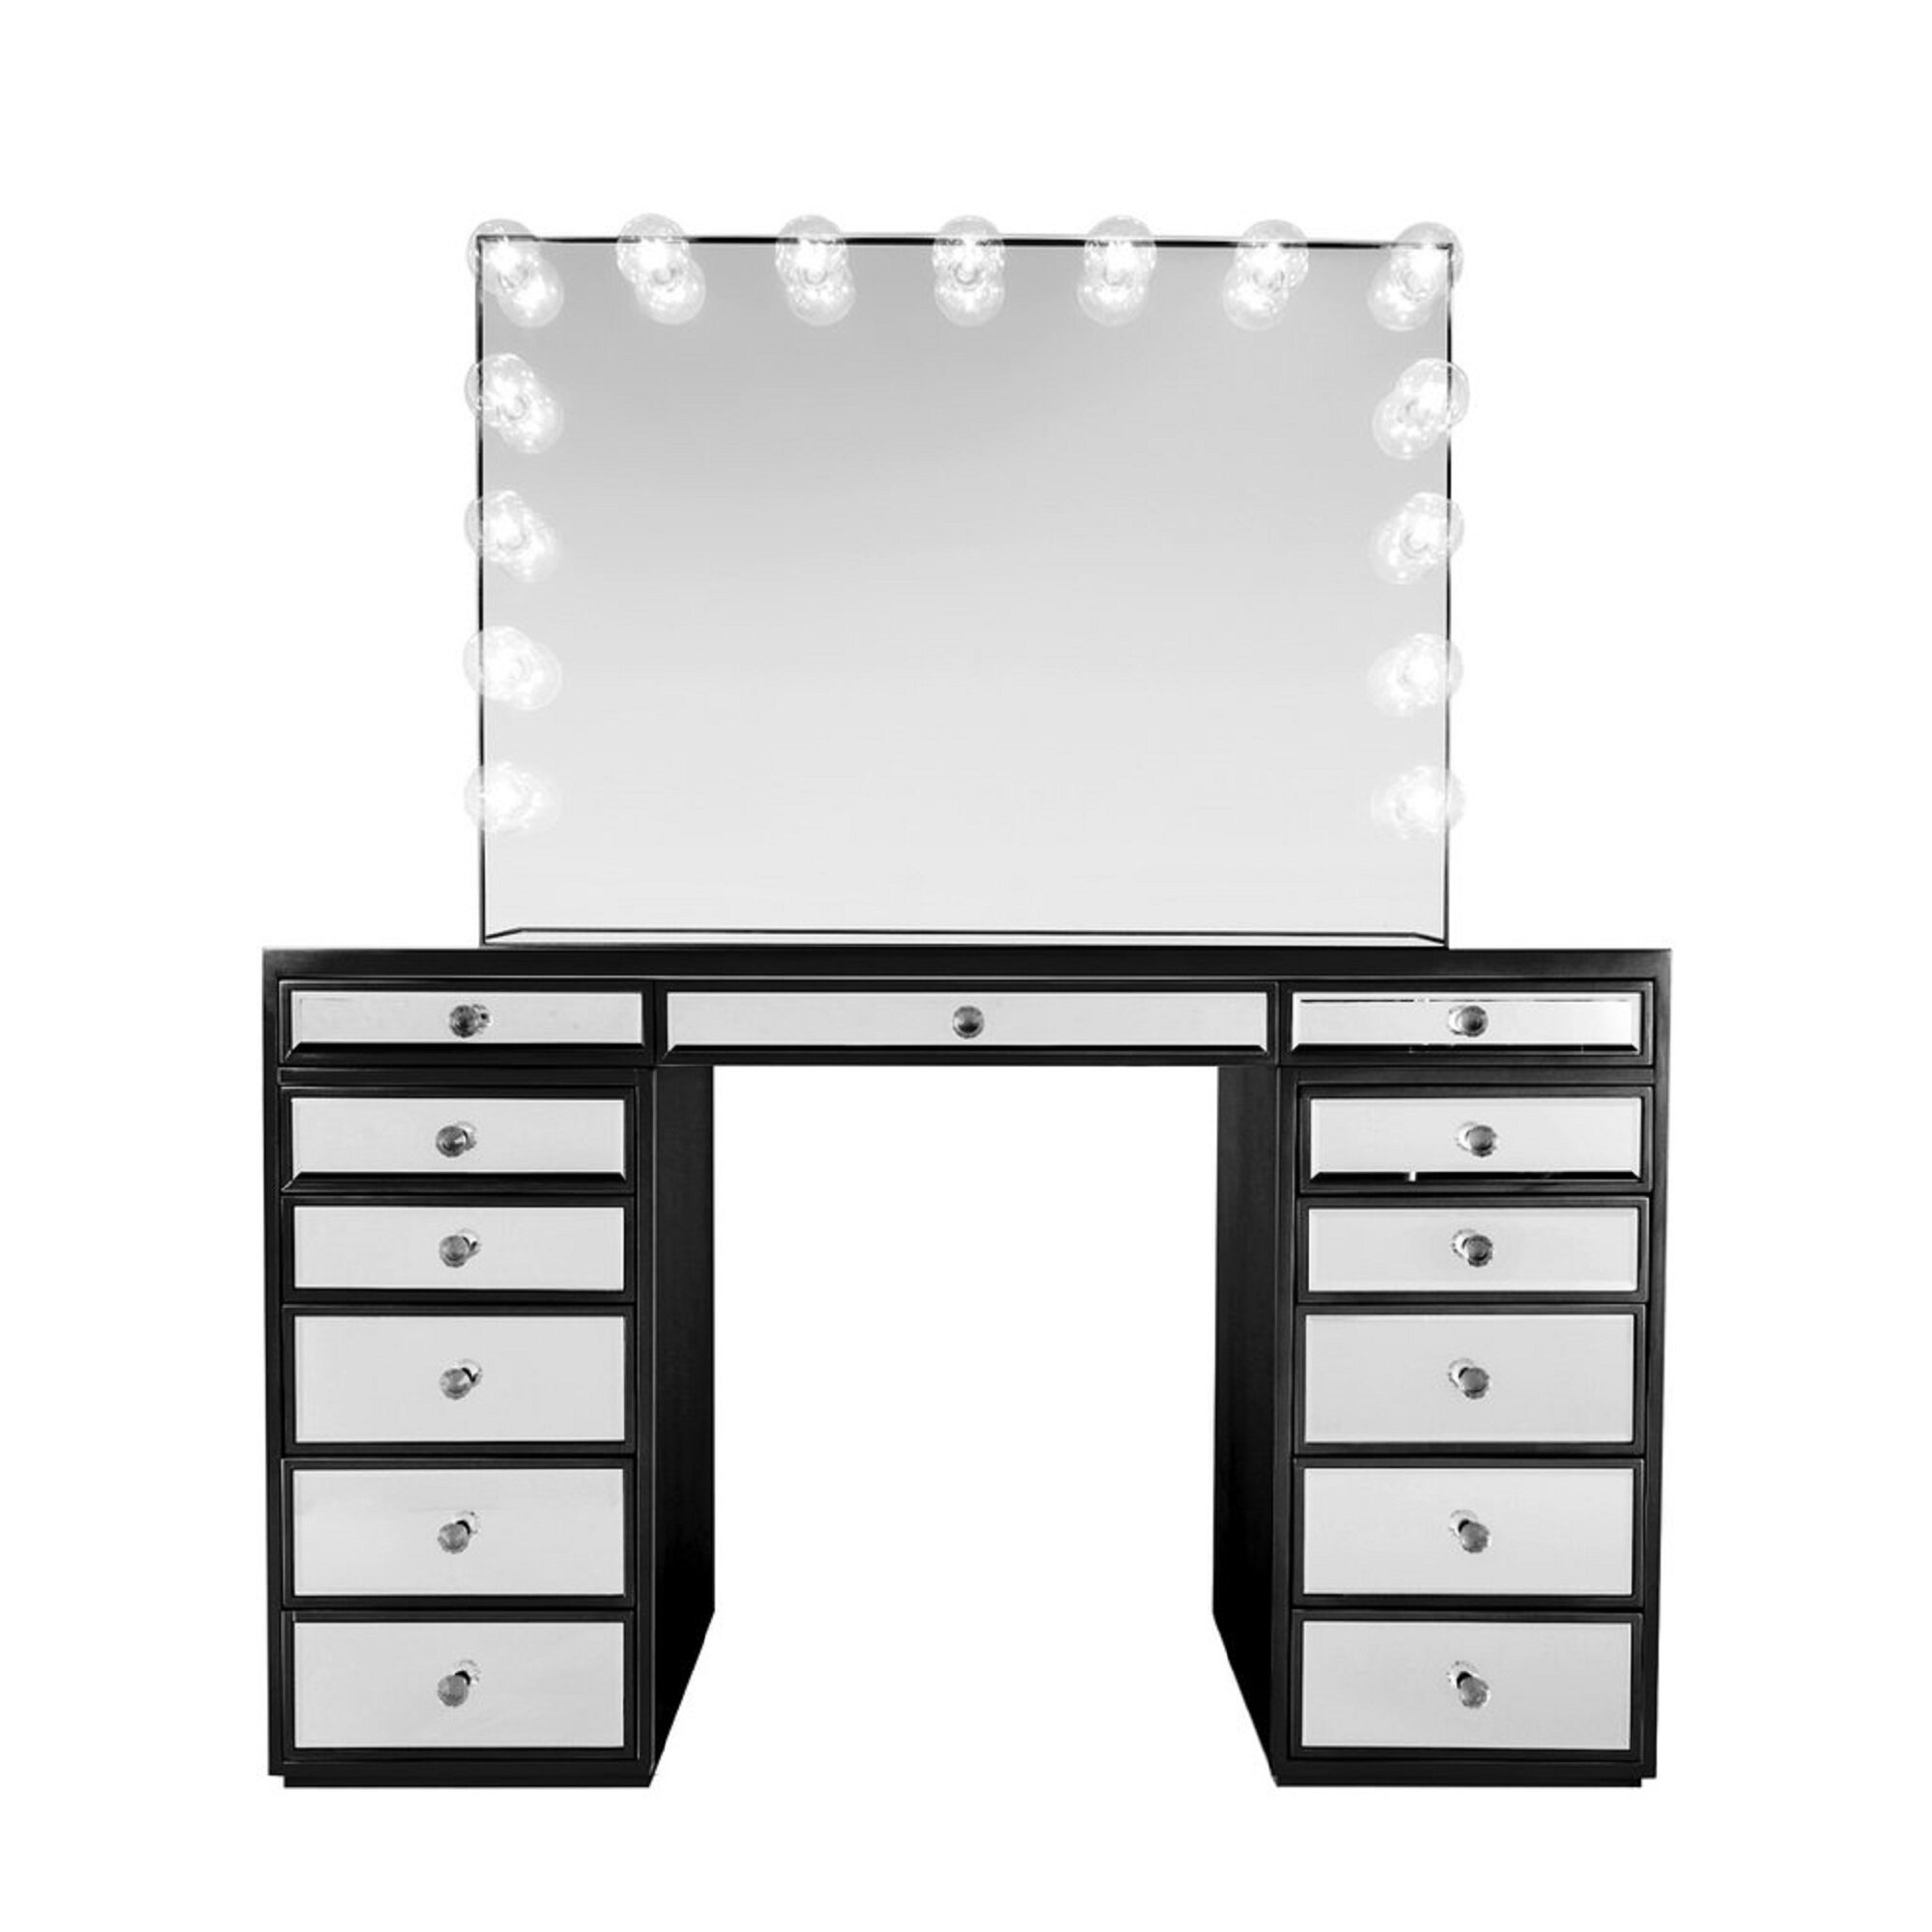 Impressions Vanity SlayStation Makeup Vanity Storage Drawer Unit with 9 Drawers (Bright White)